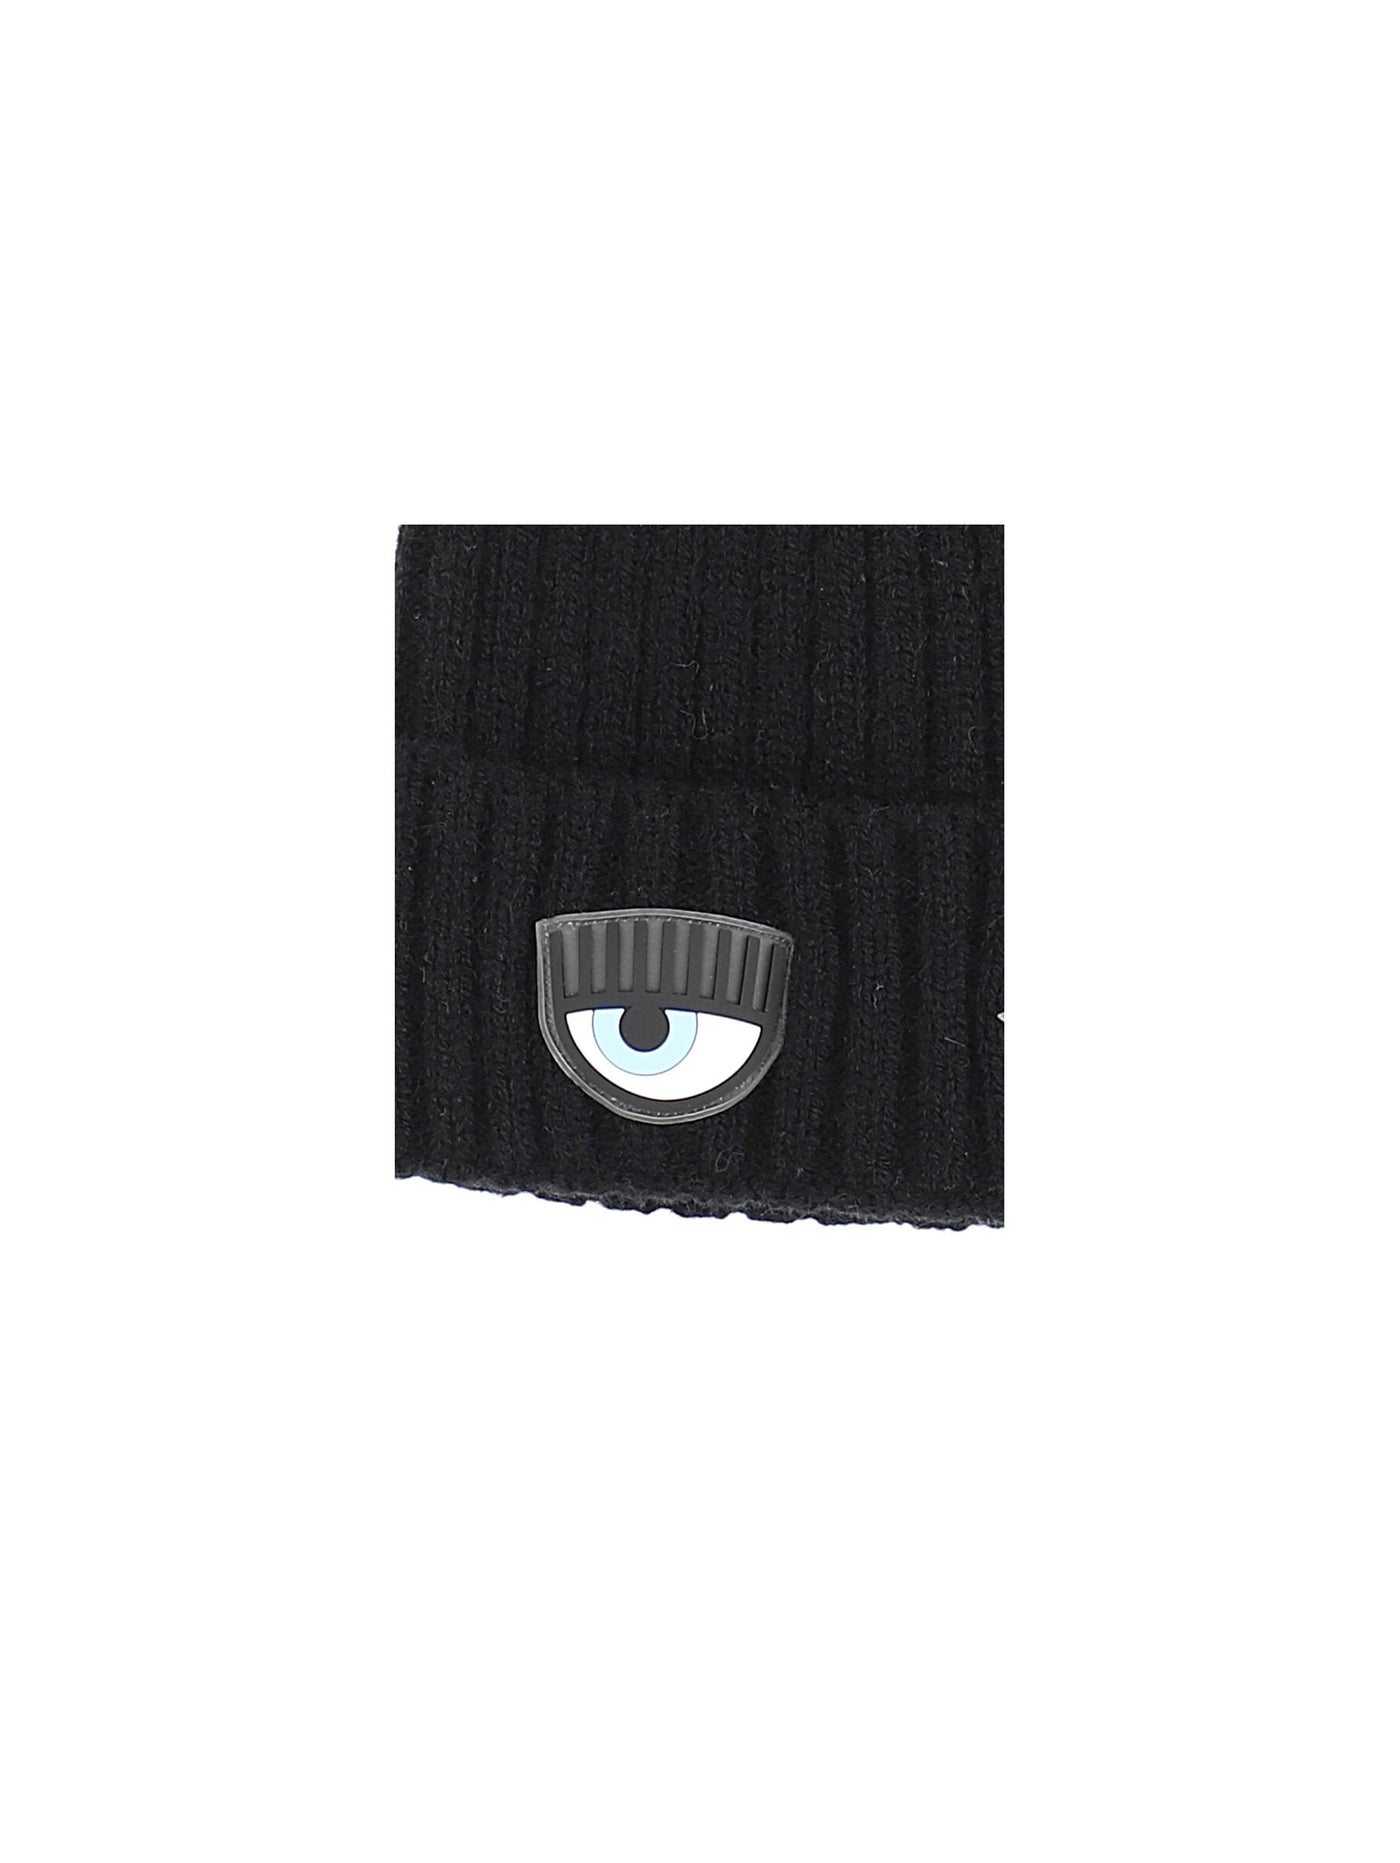 CHIARA FERRAGNI - Eyestar wool blend hat